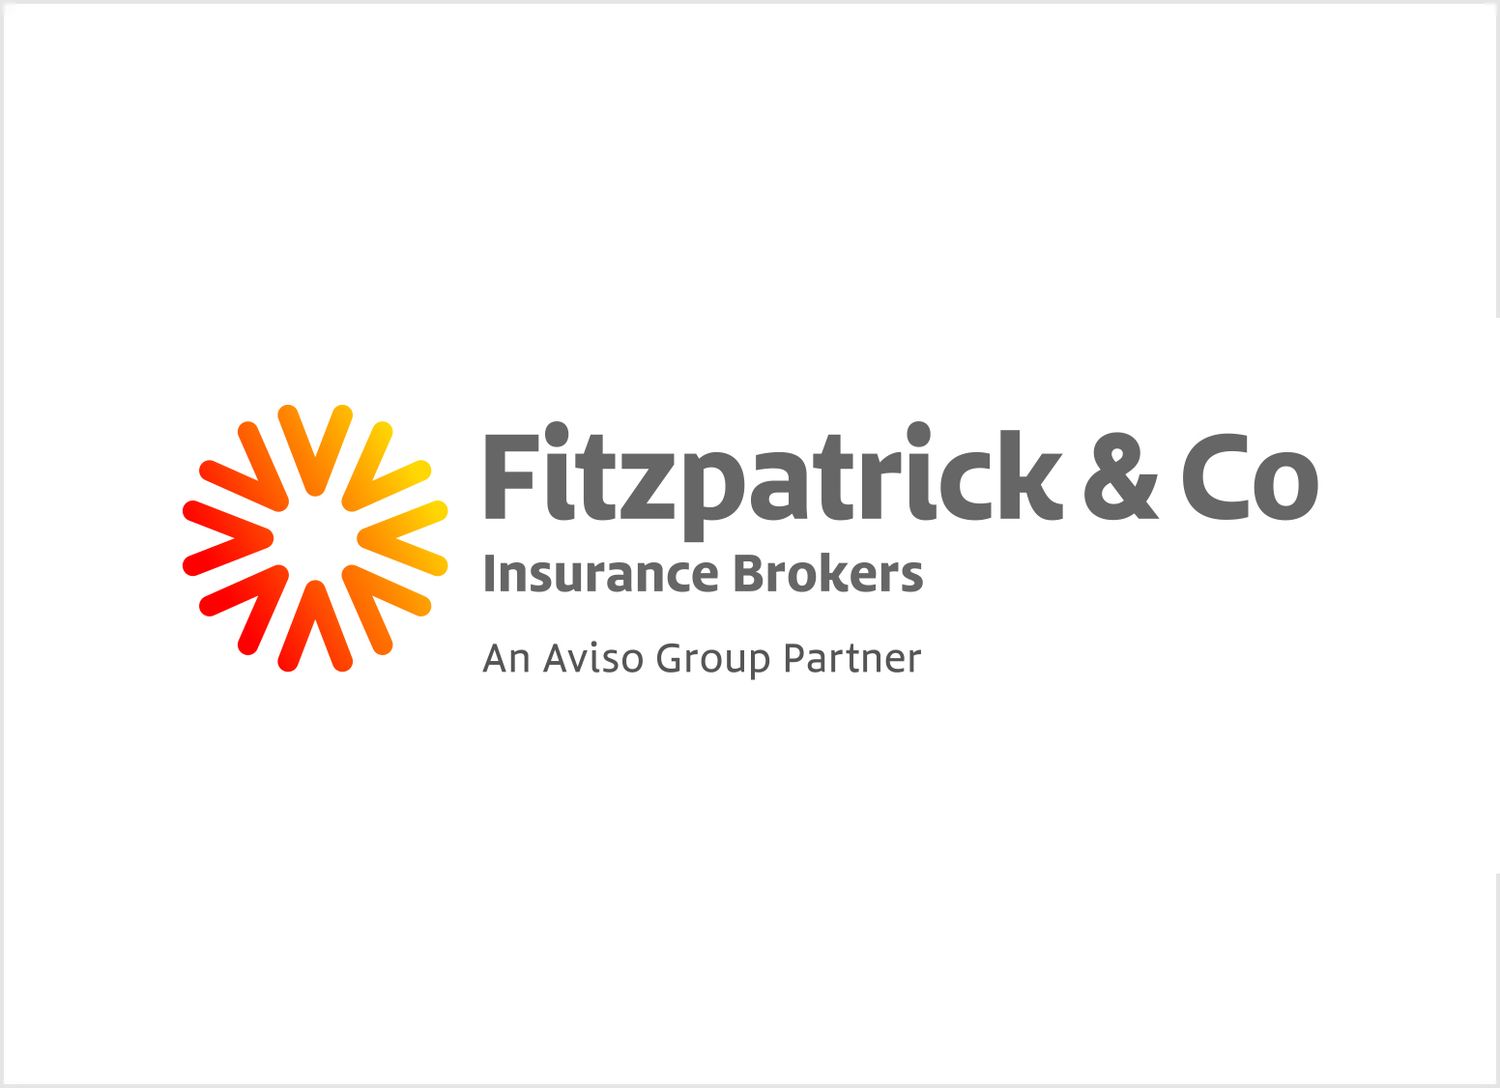 Fitzpatrick & Co Insurance Brokers